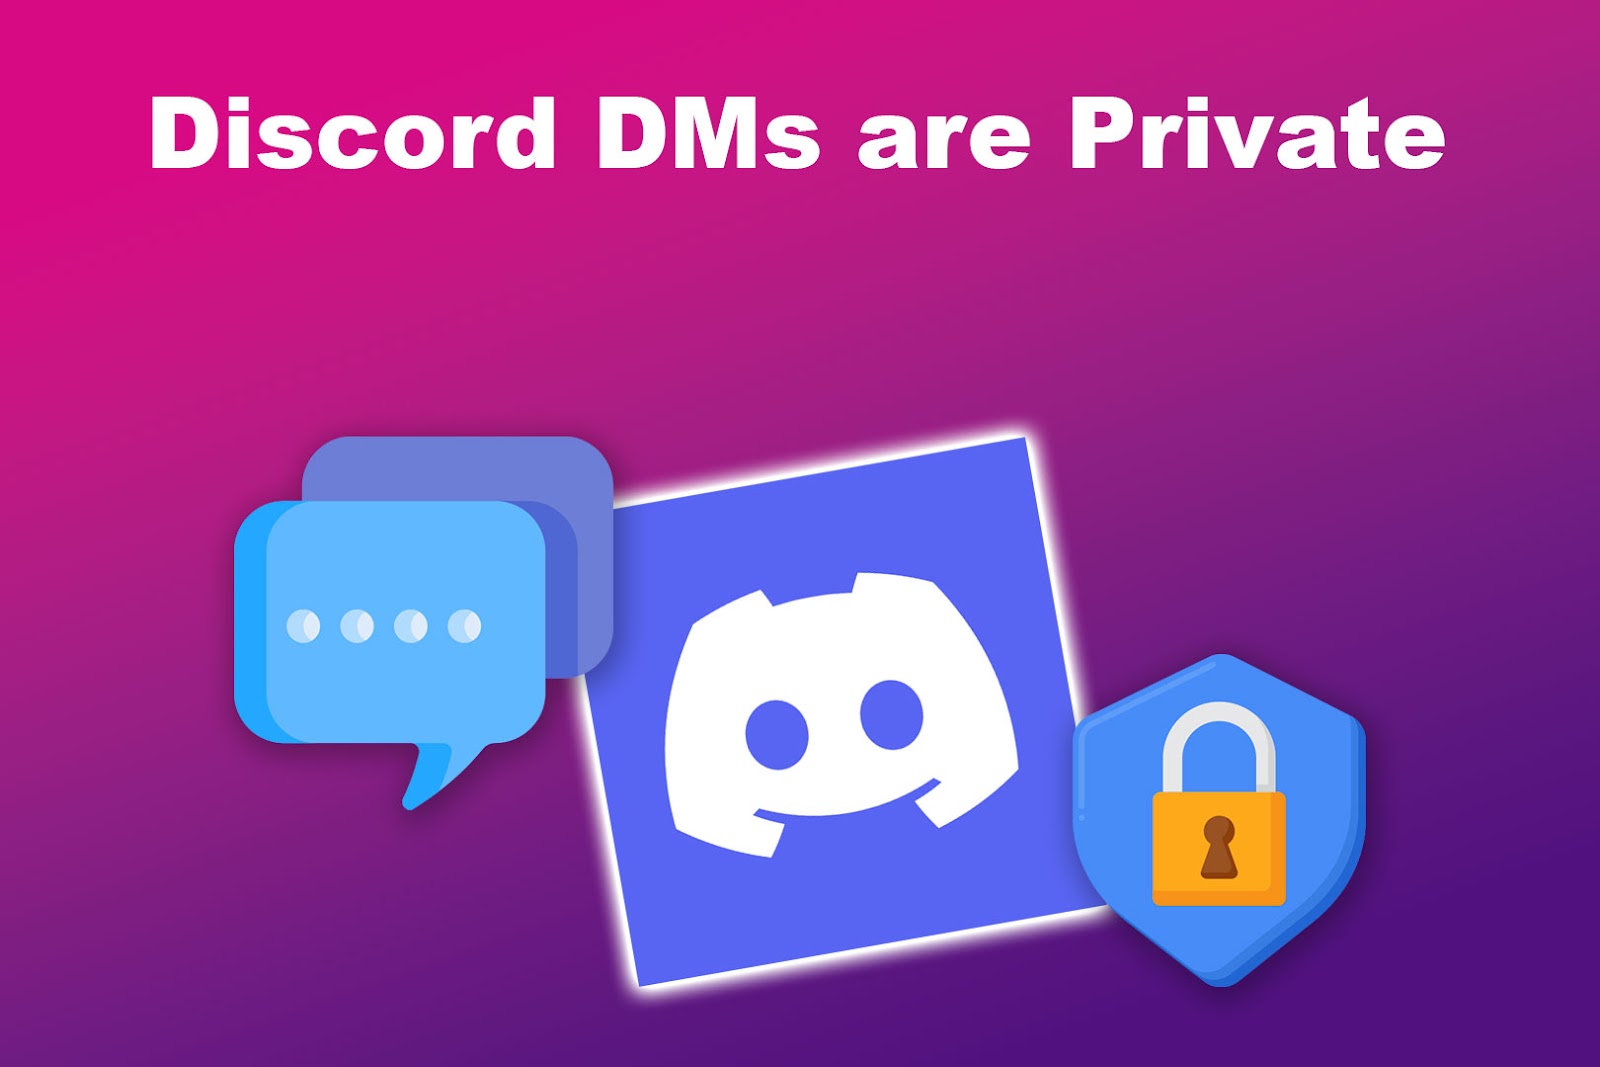 Are Discord DMs Private?